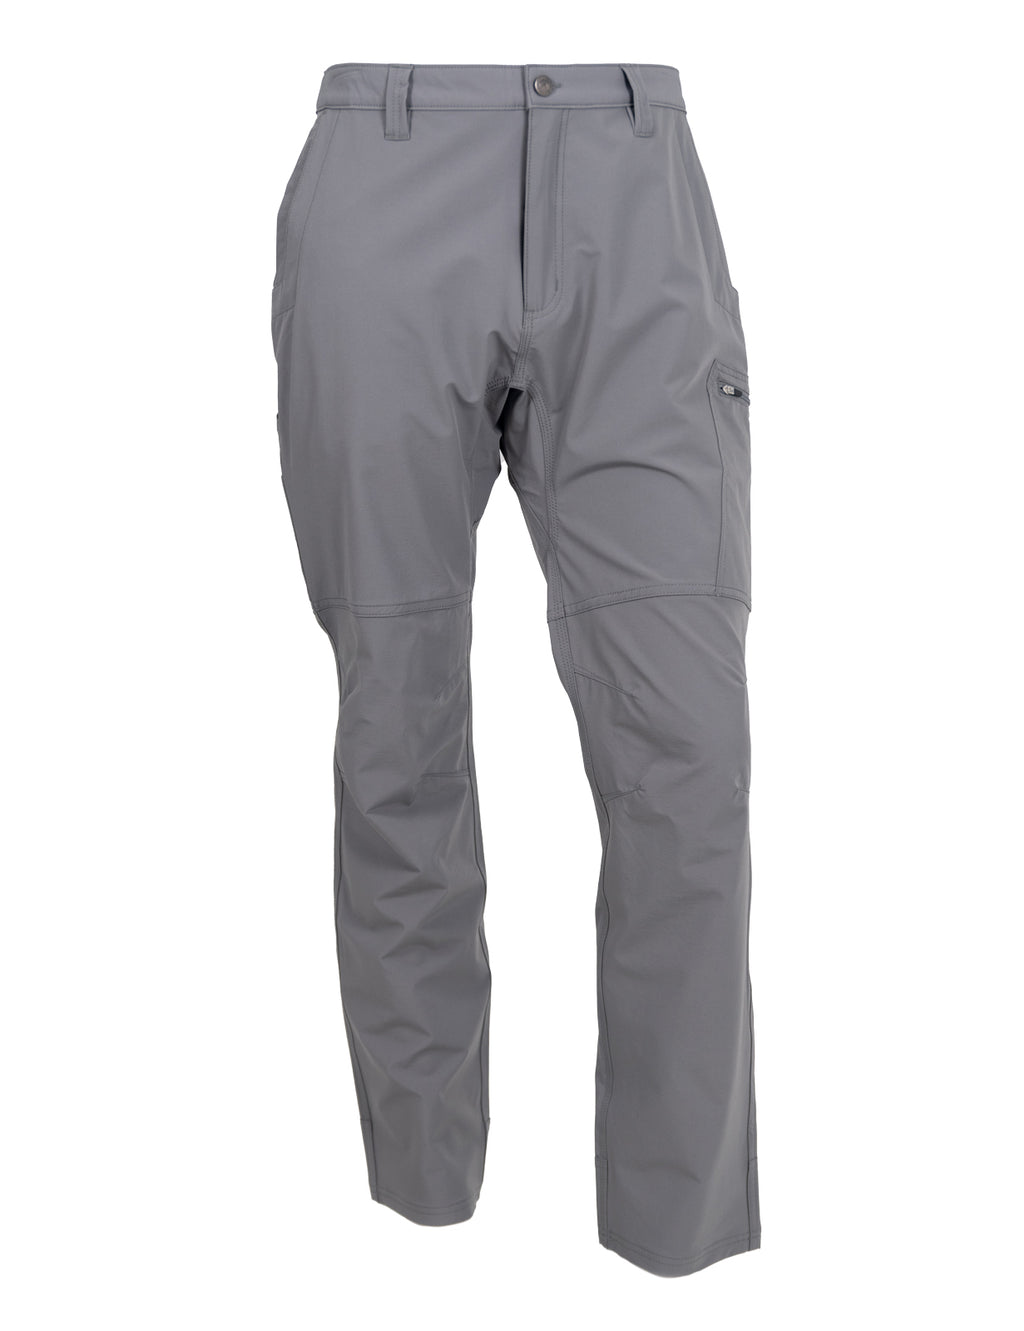 Men's Ridgeline Hybrid Pant